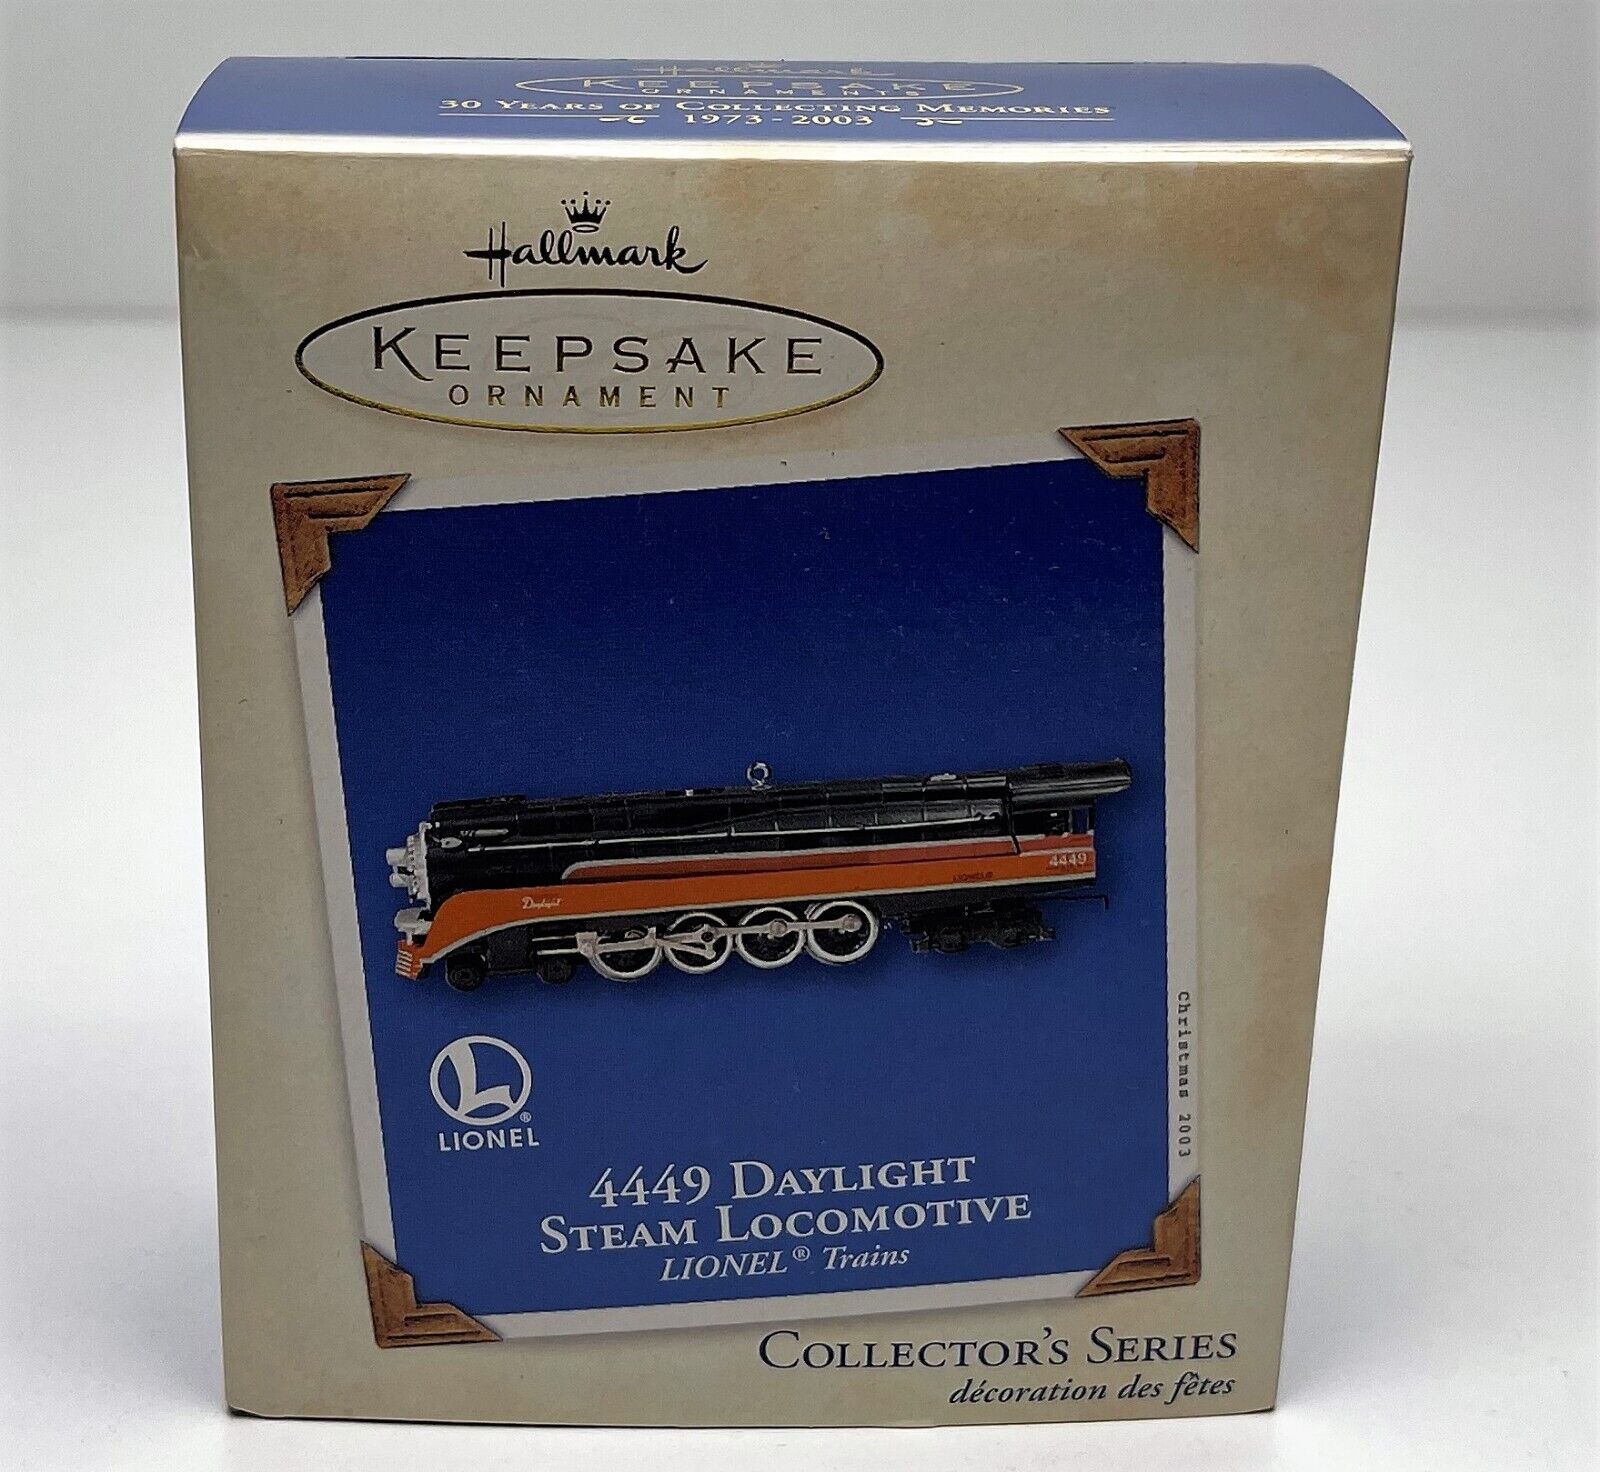 Hallmark Keepsake Ornament - Lionel 4449 Daylight Steam Locomotive - New